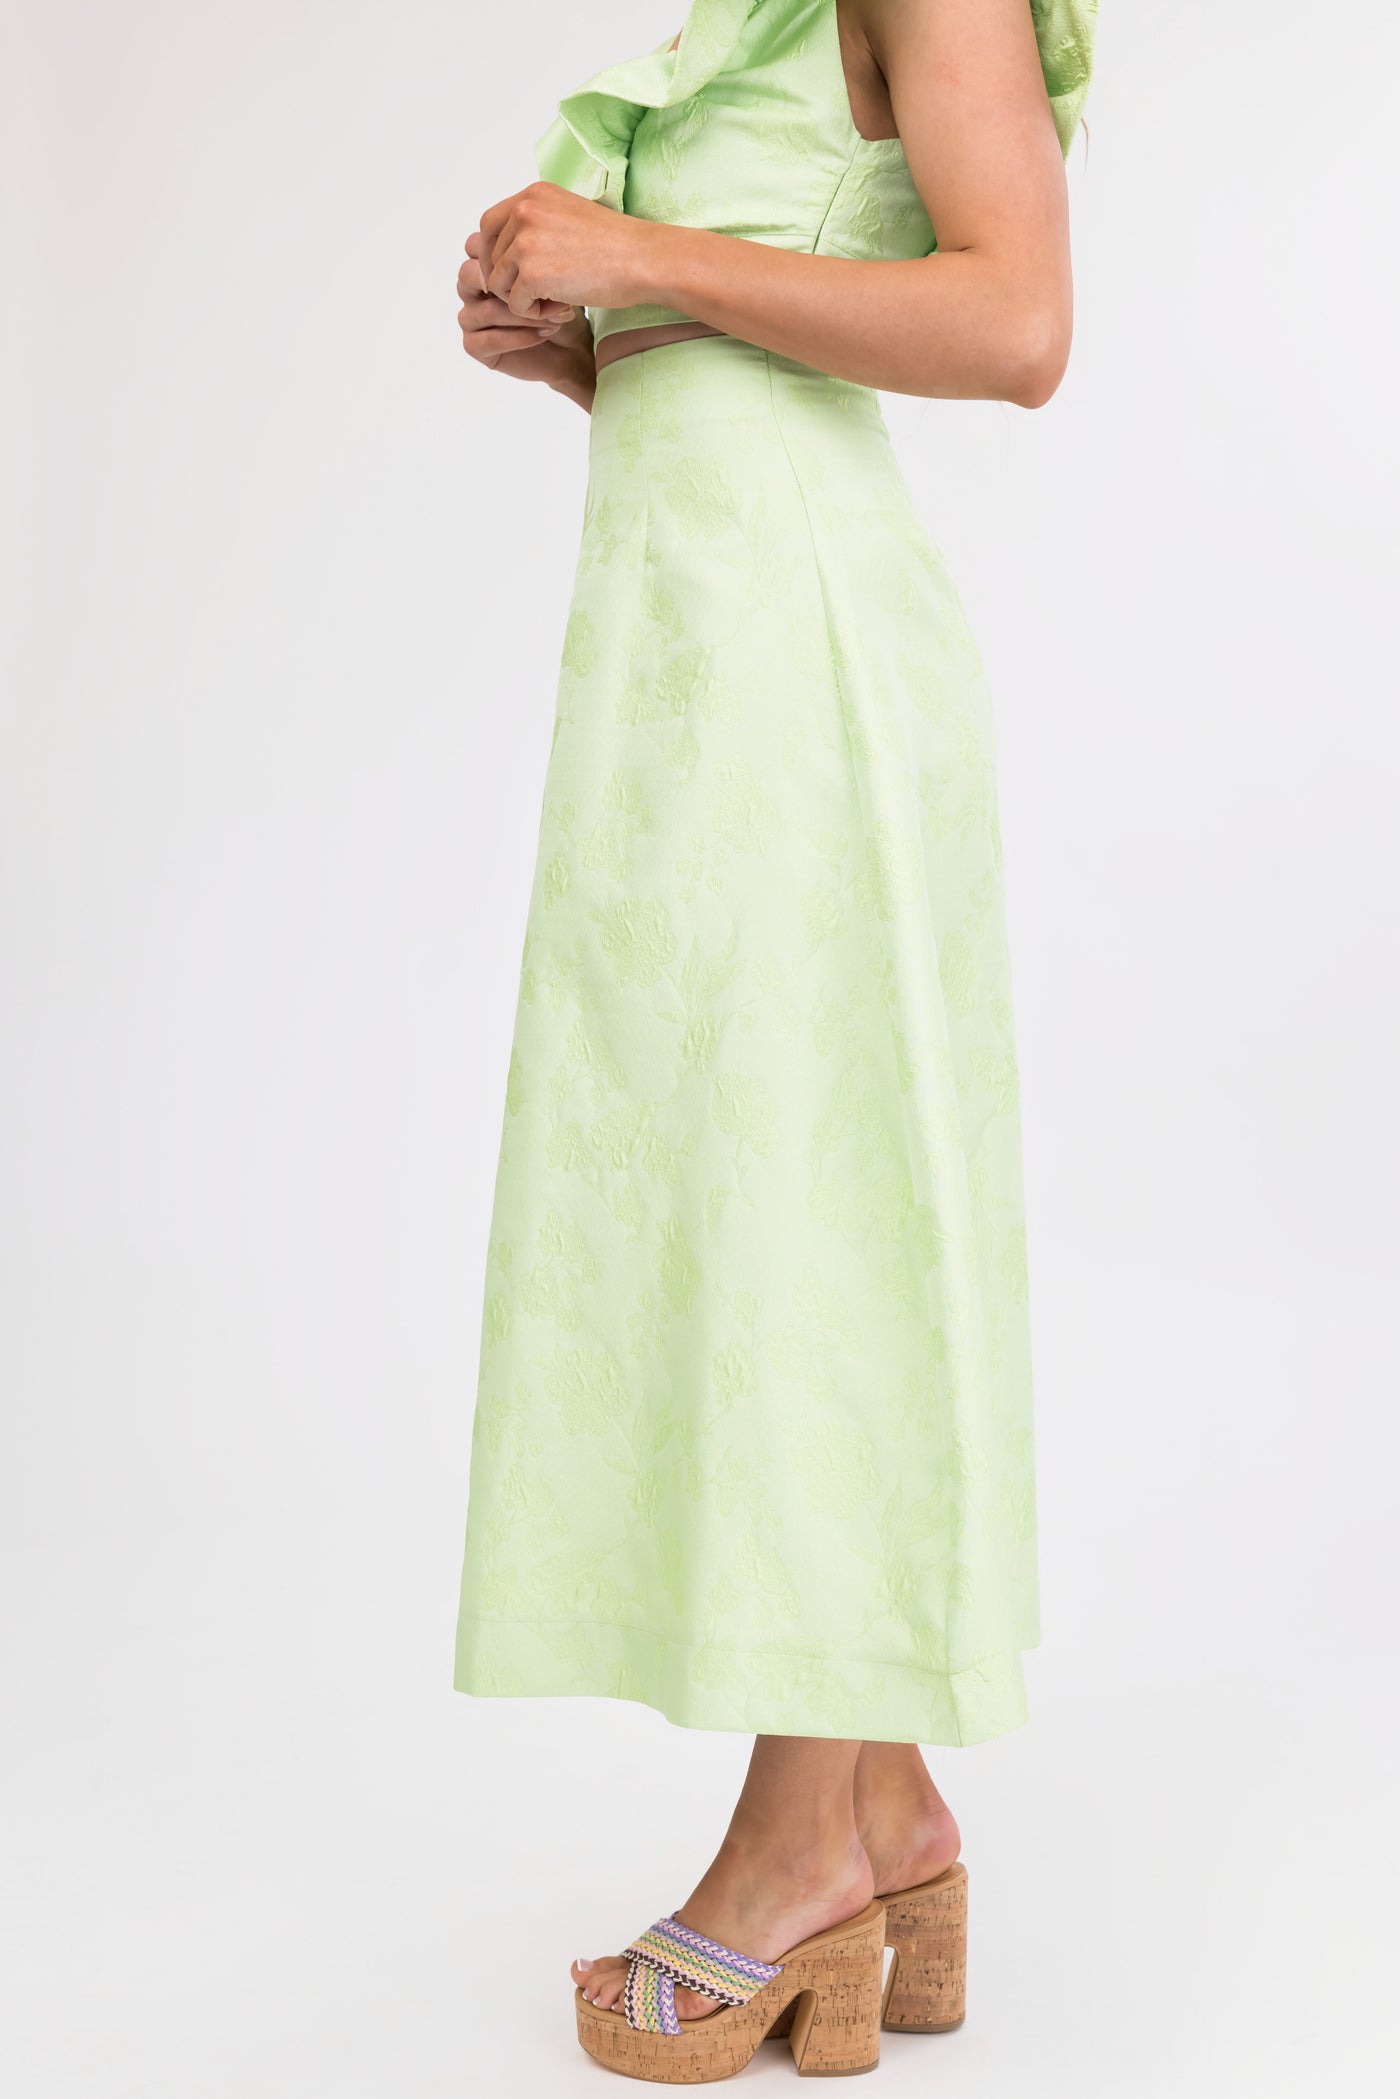 Light Lime Floral Jacquard A Line Midi Skirt